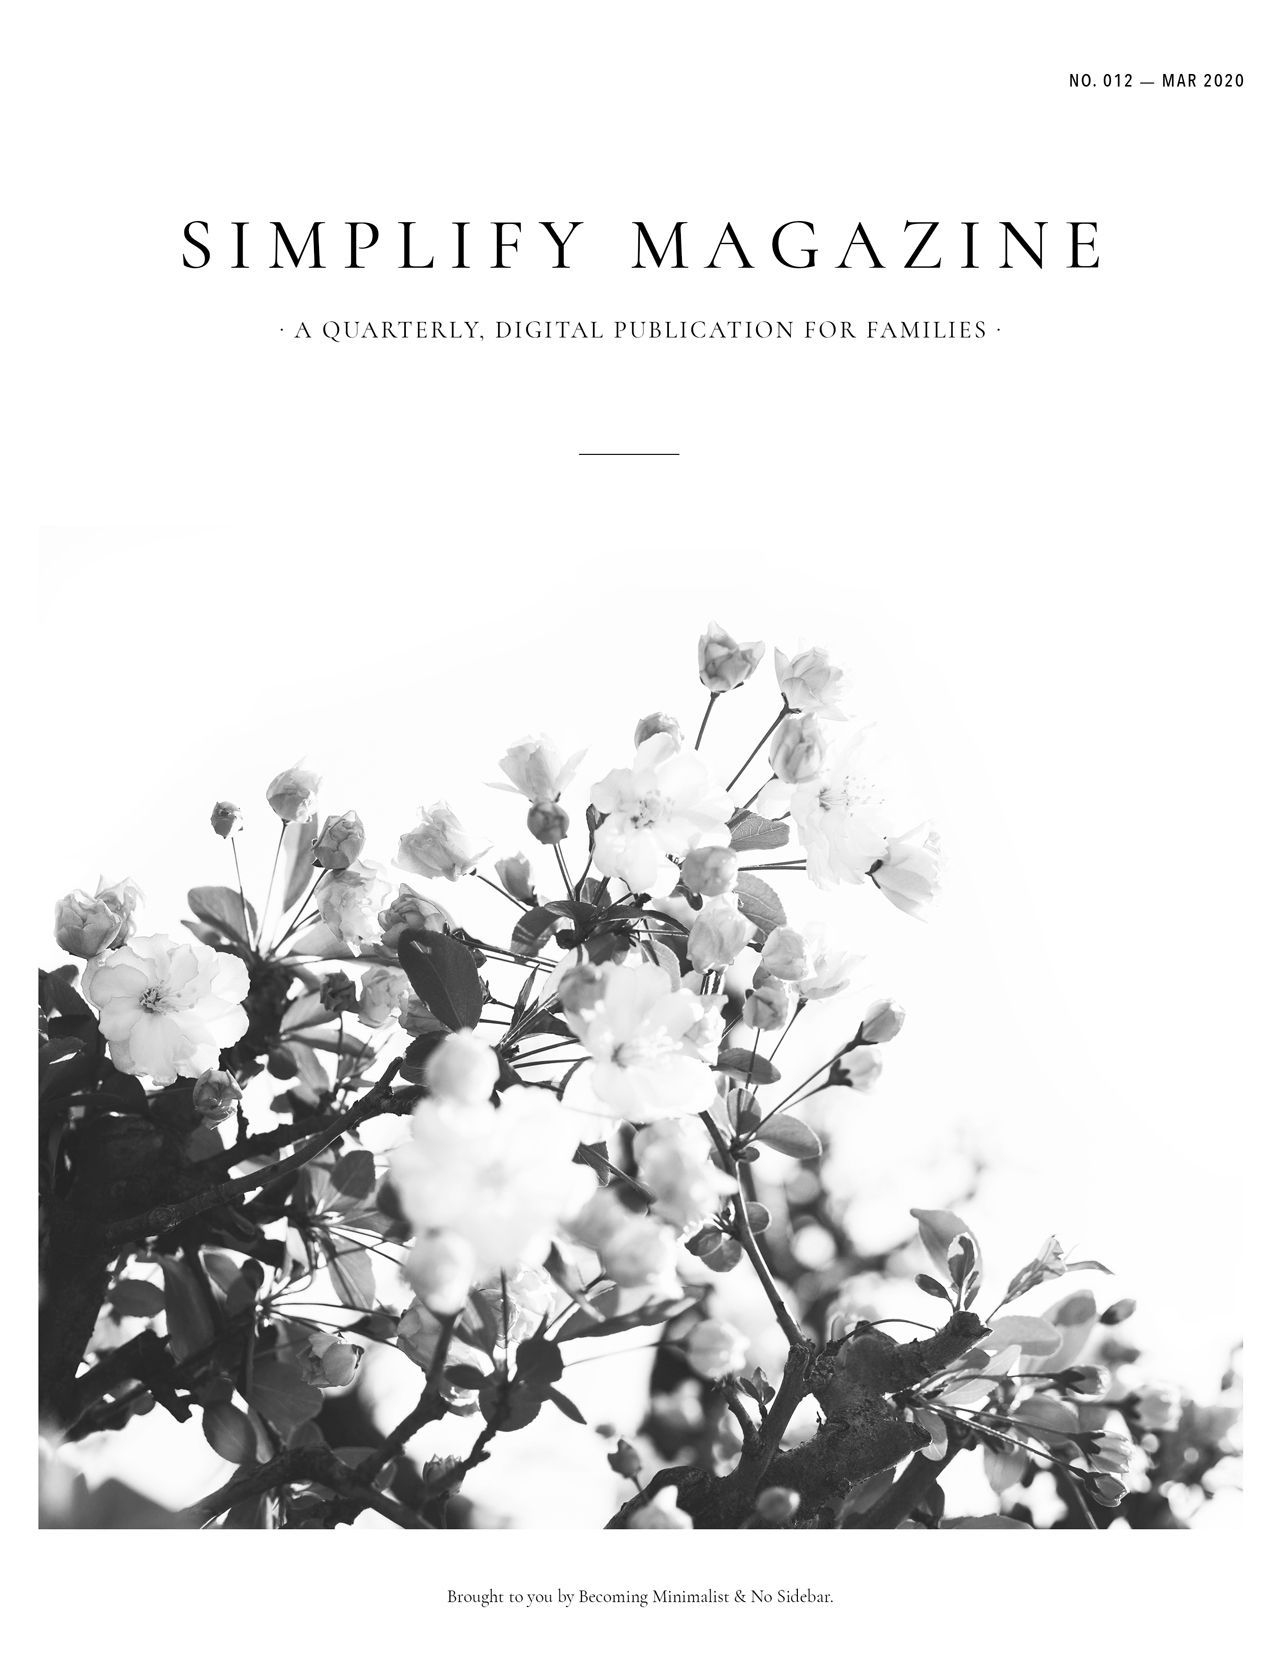 Simplify Magazine Issue #012